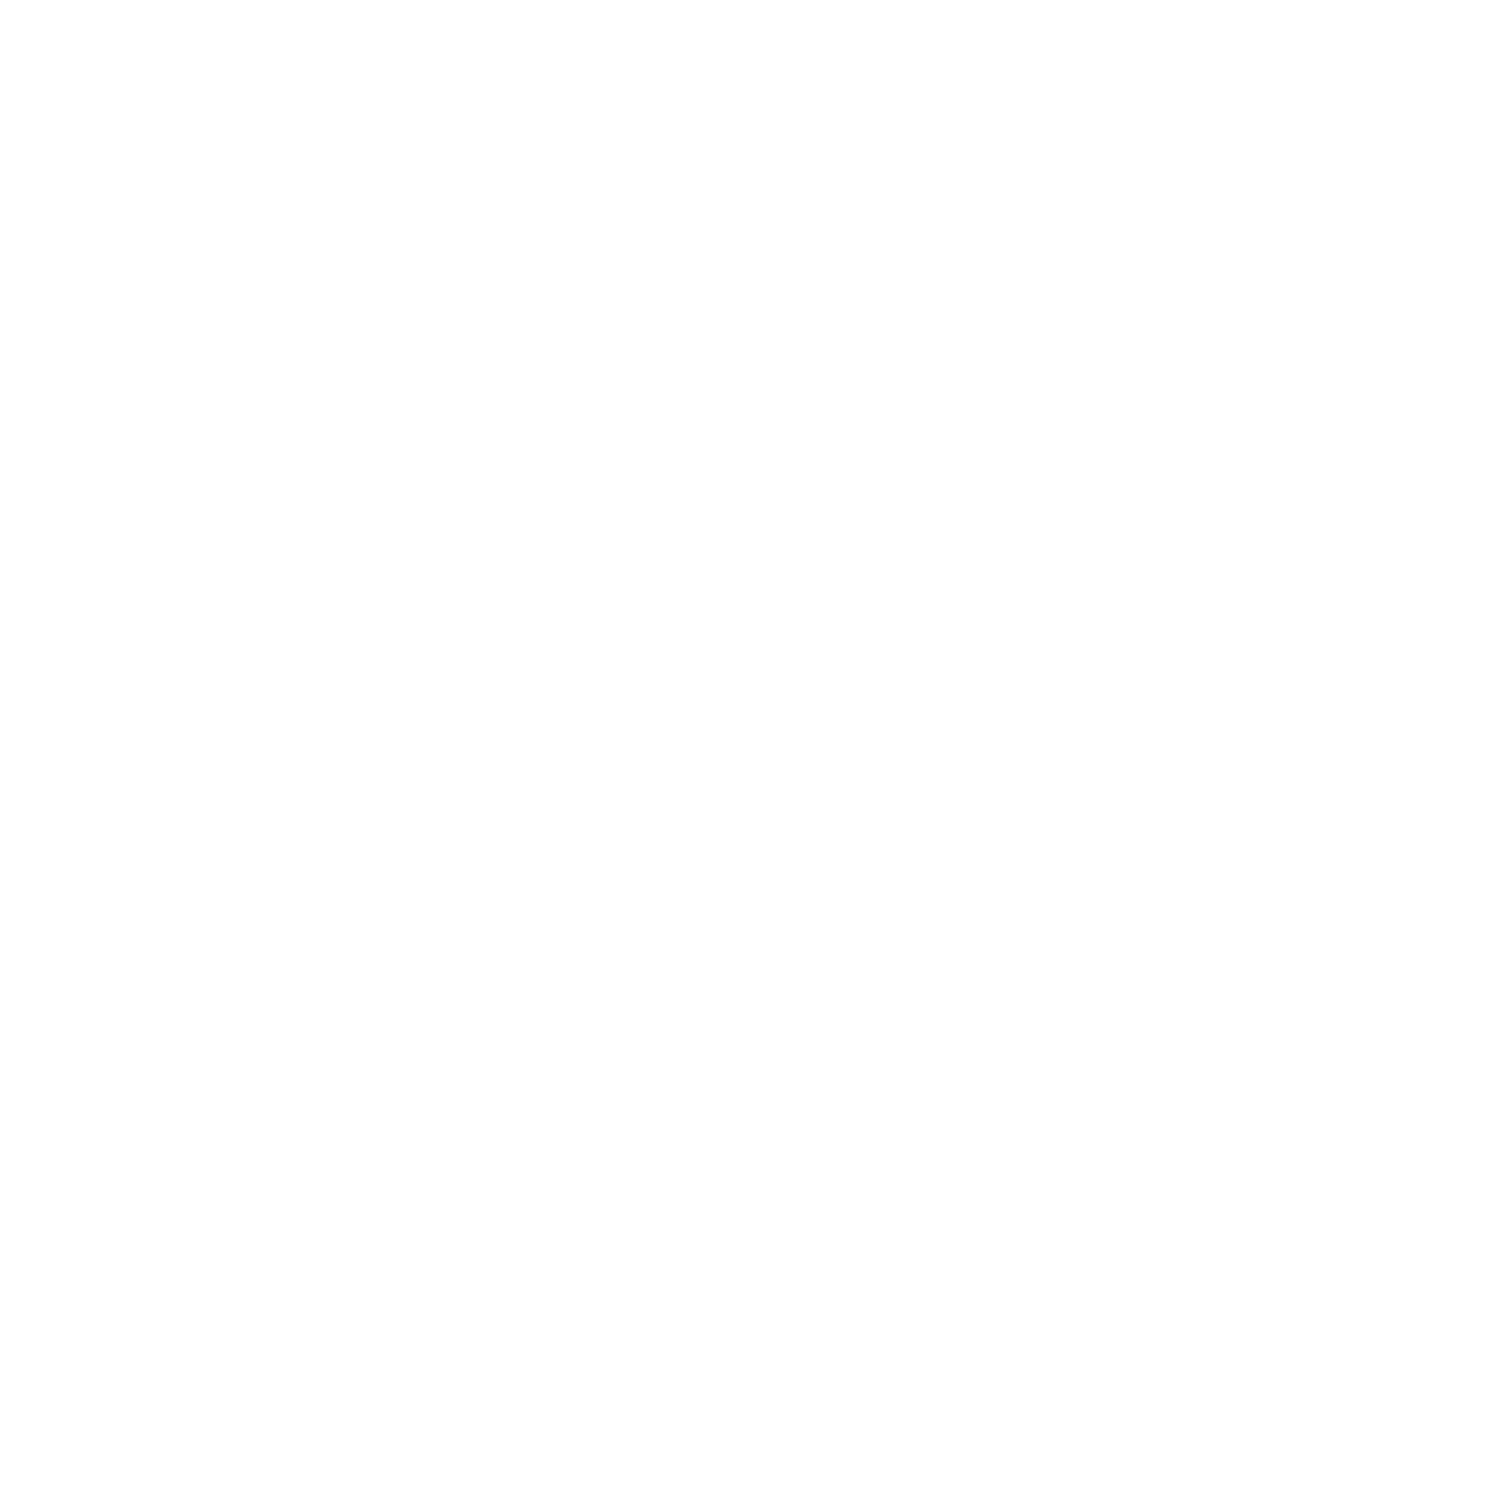 Boogey The Beat